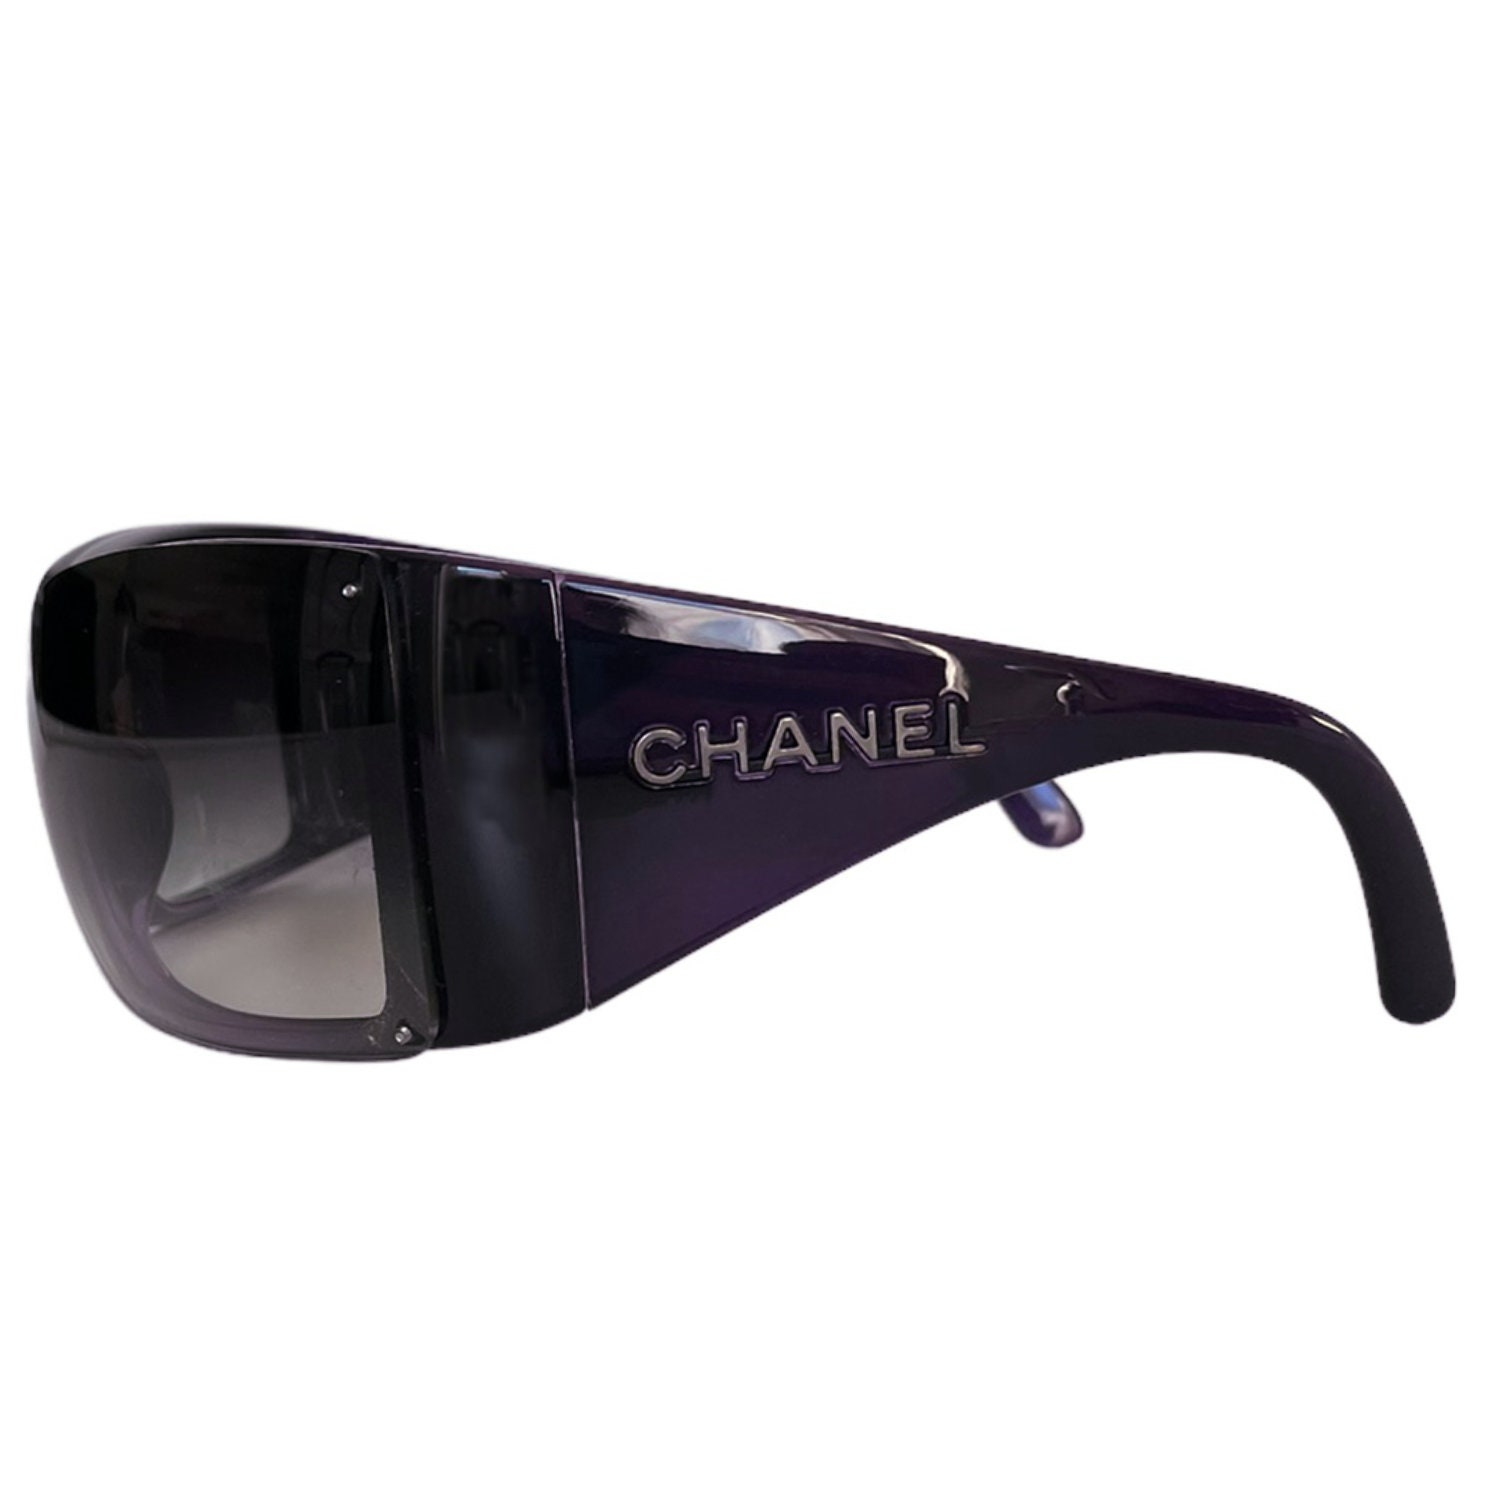 Chanel Sunglasses Authentic Chanel Logo Wraparound Ski -  Denmark